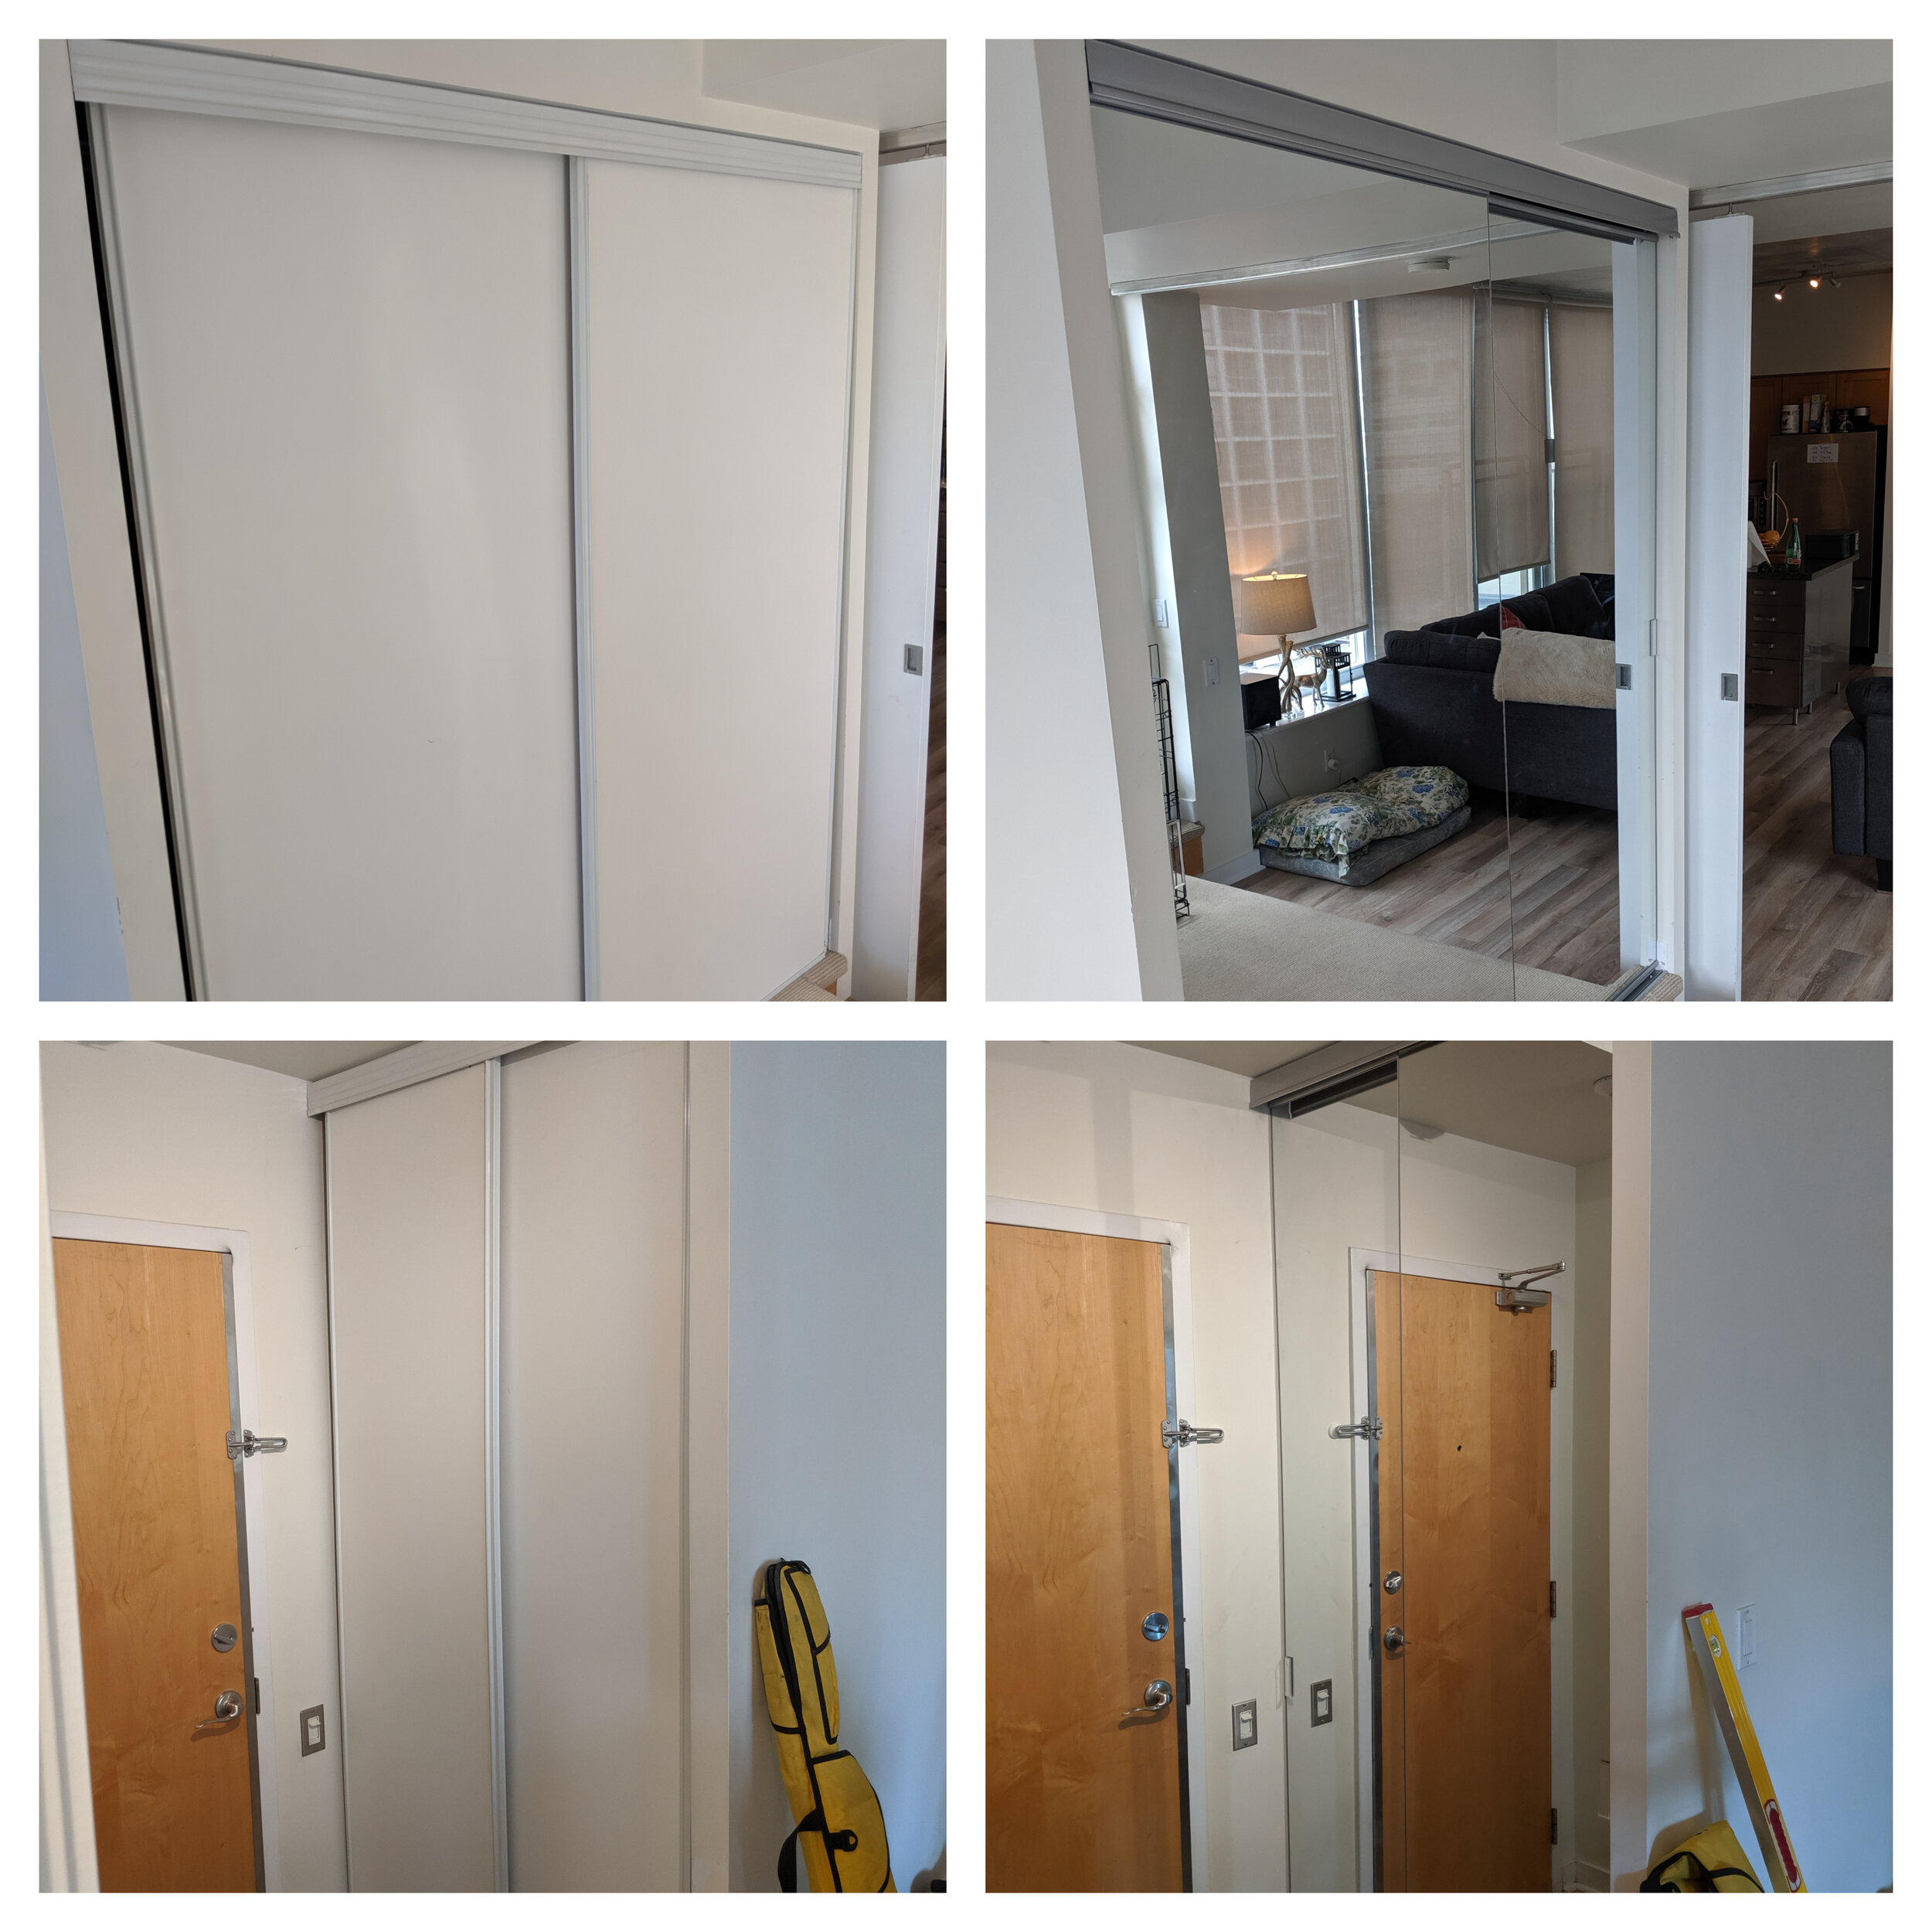 Sliding Closet Doors Installation And, How To Hang Mirror On Sliding Closet Door